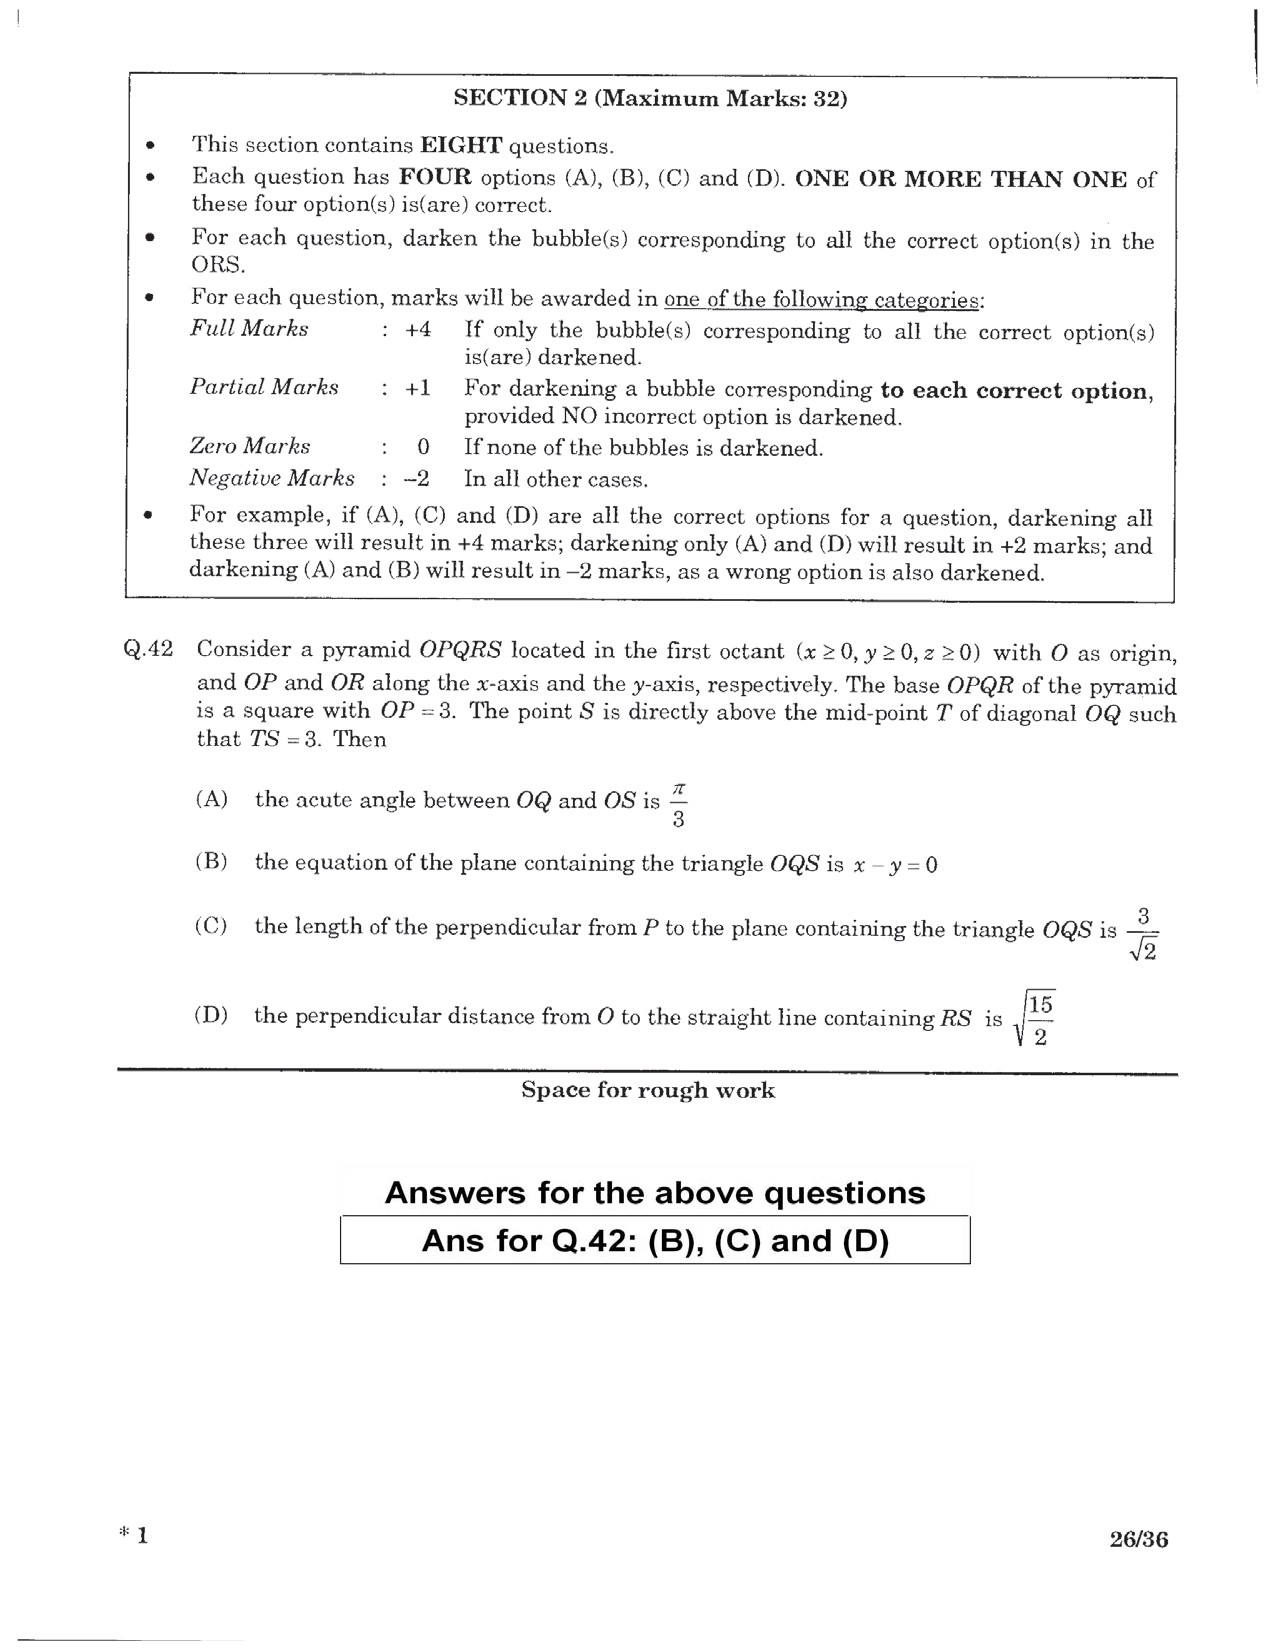 JEE Advanced Exam Question Paper 2016 Paper 1 Mathematics 3